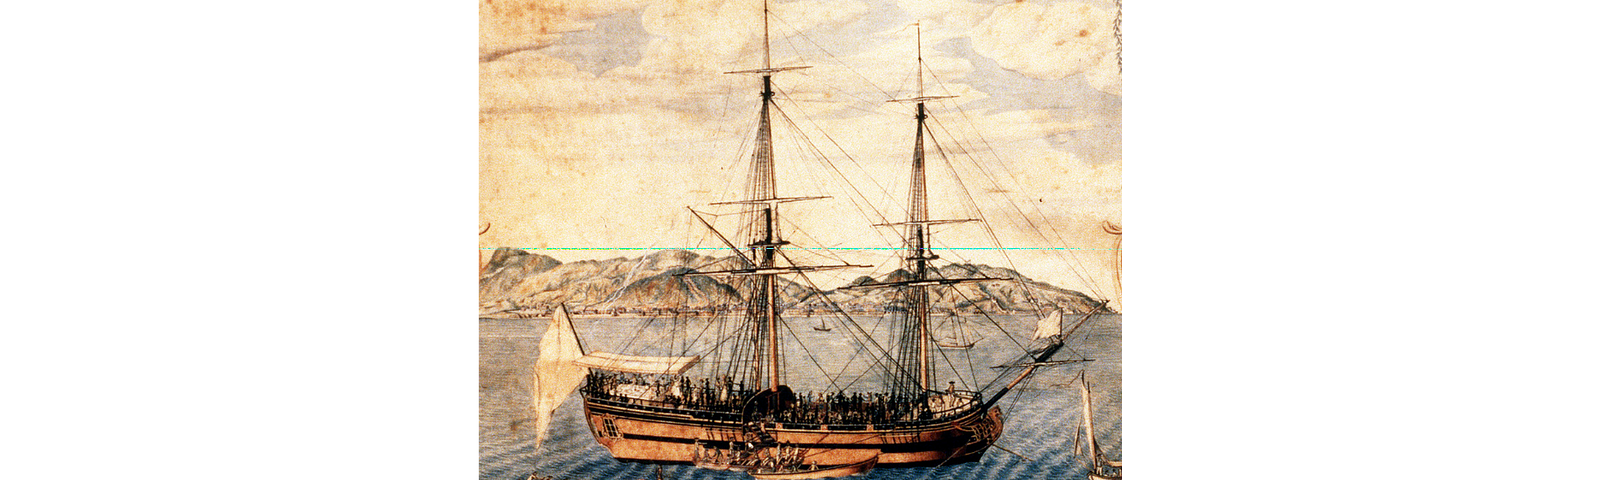 Marie-Séraphique 1773 slave ship registered in Nantes at anchor in Cape François harbour in Saint Dominique en route from Angola